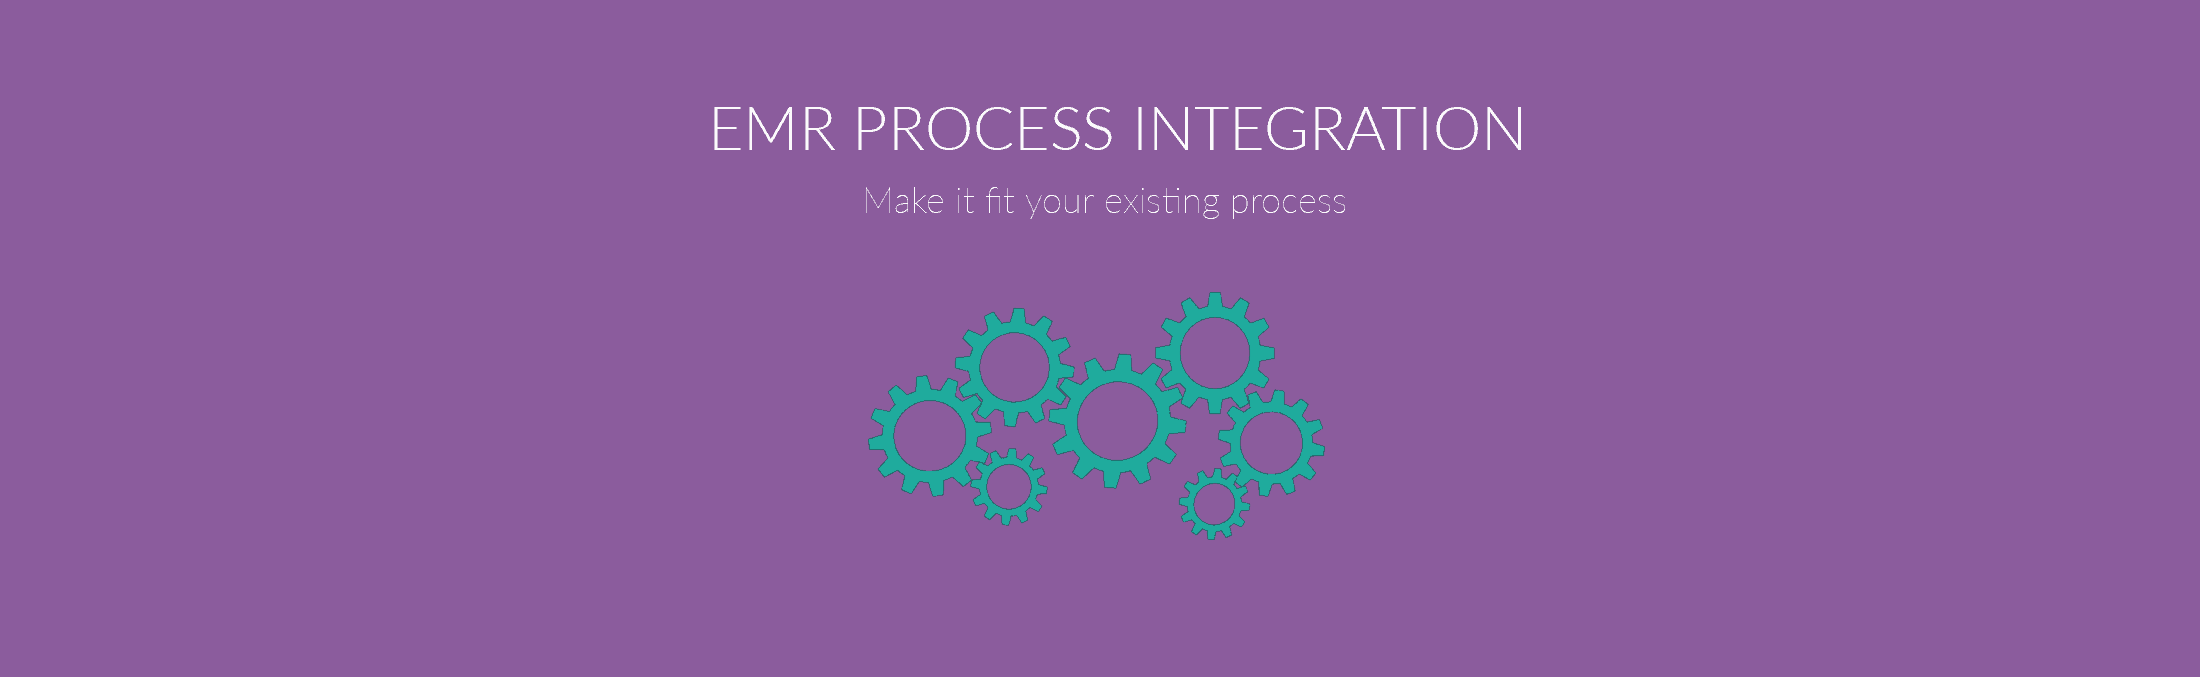 EMR Process Integration